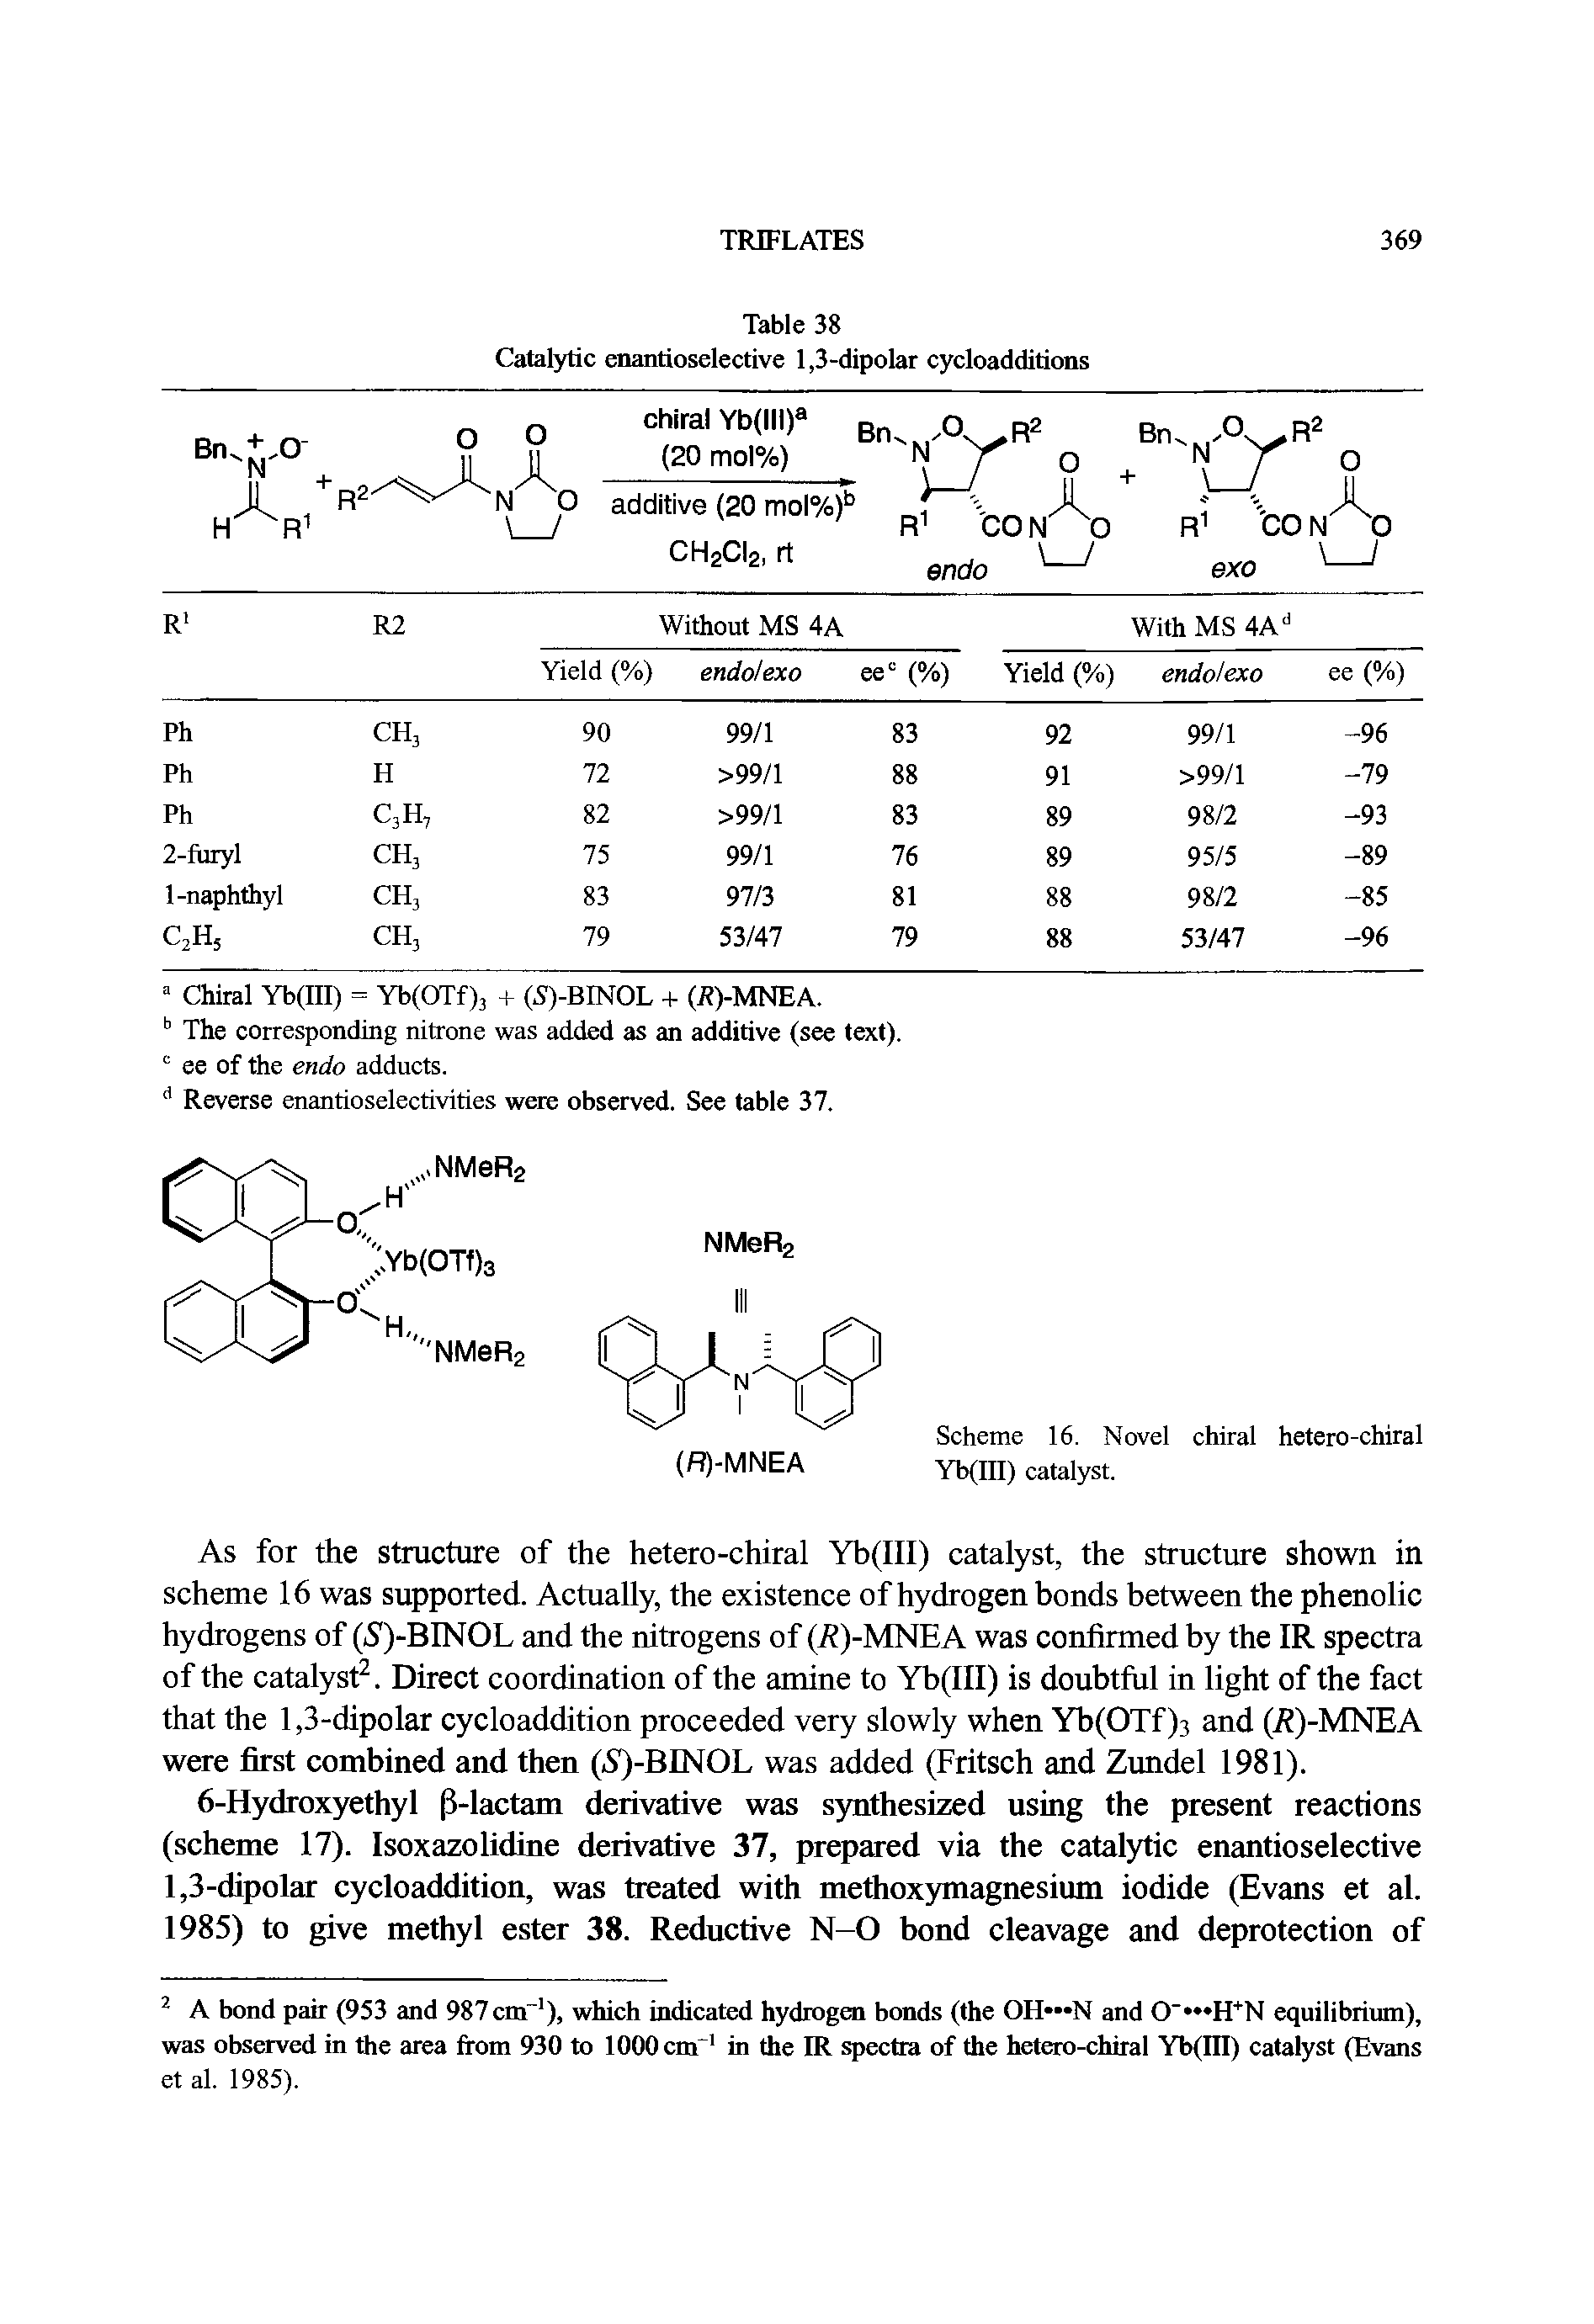 Scheme 16. Novel chiral hetero-chiral Yb(III) catalyst.